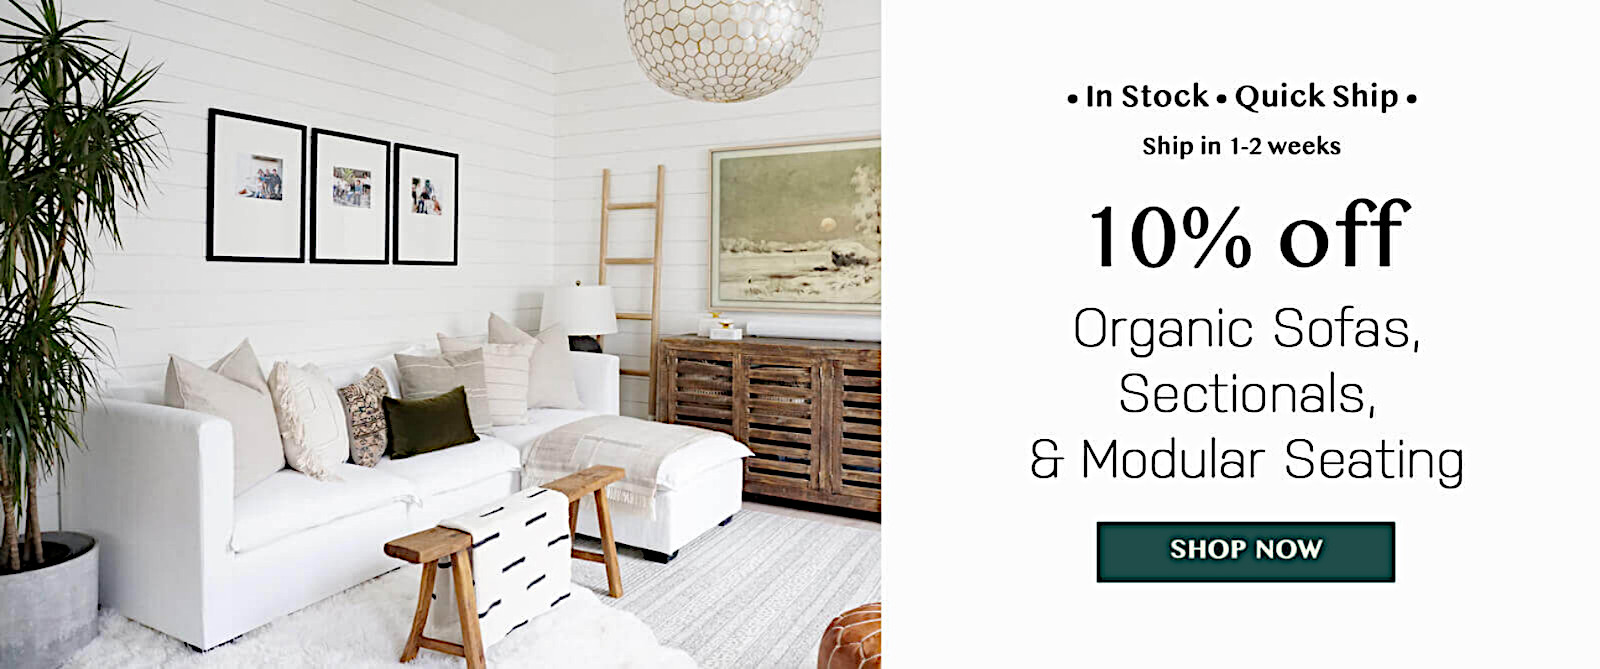 Good Value organic sofas sectionals modular seating